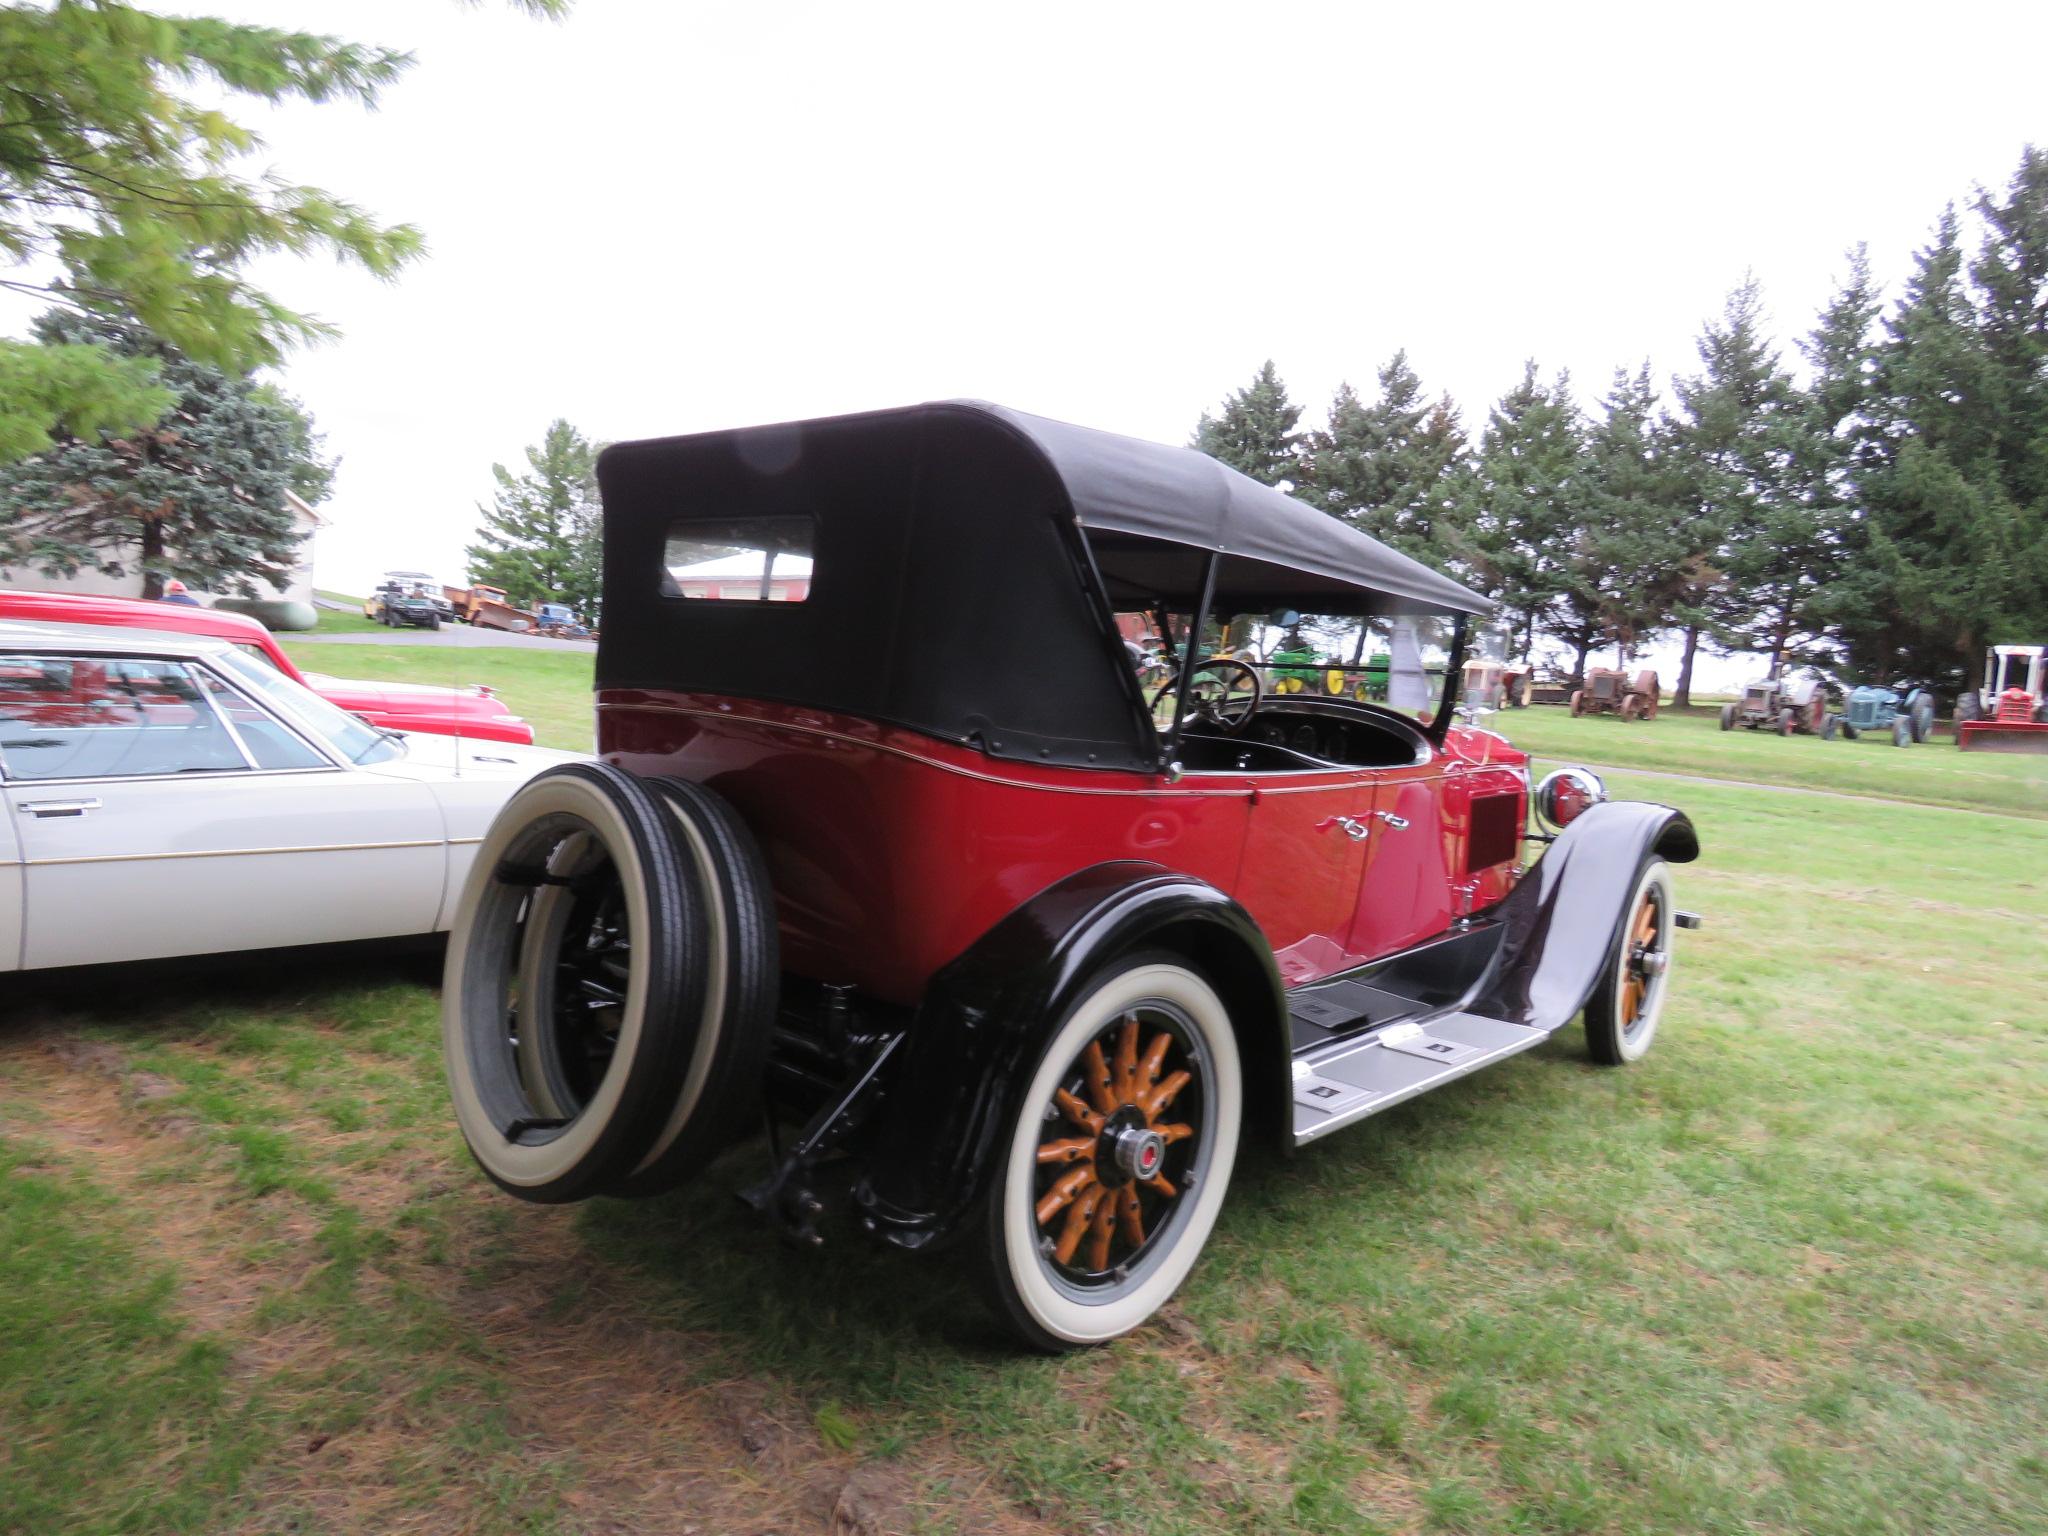 1922 Packard Series 126 Single Six touring Car